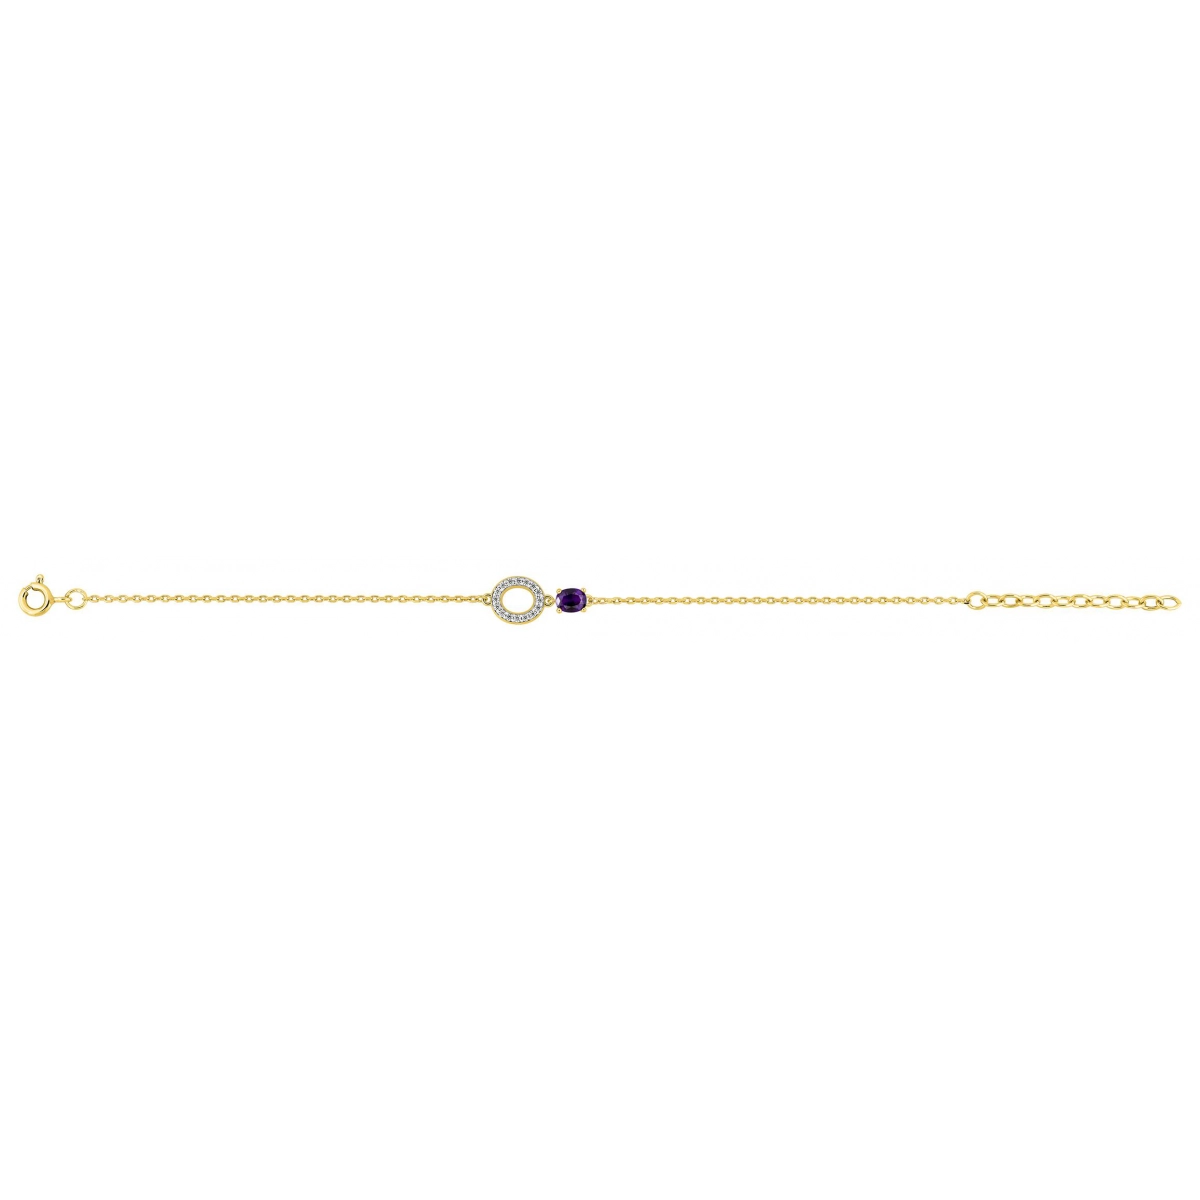 Pulsera oz.violet+blc chapado en oro rh Lua Blanca 256911.5.0